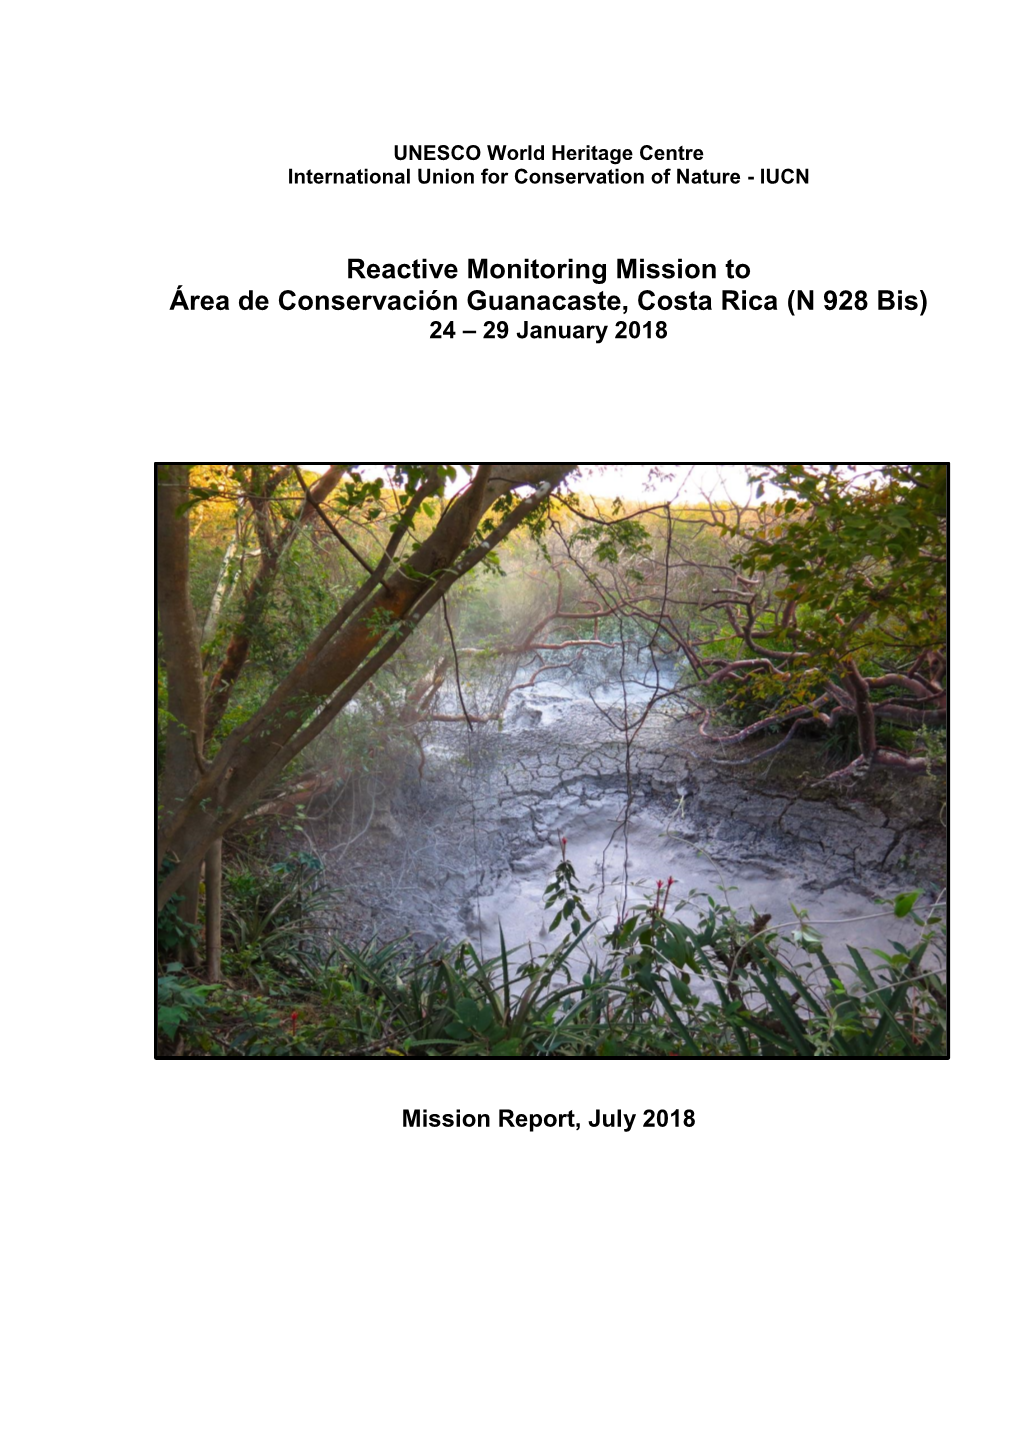 Reactive Monitoring Mission to Área De Conservación Guanacaste, Costa Rica (N 928 Bis) 24 – 29 January 2018